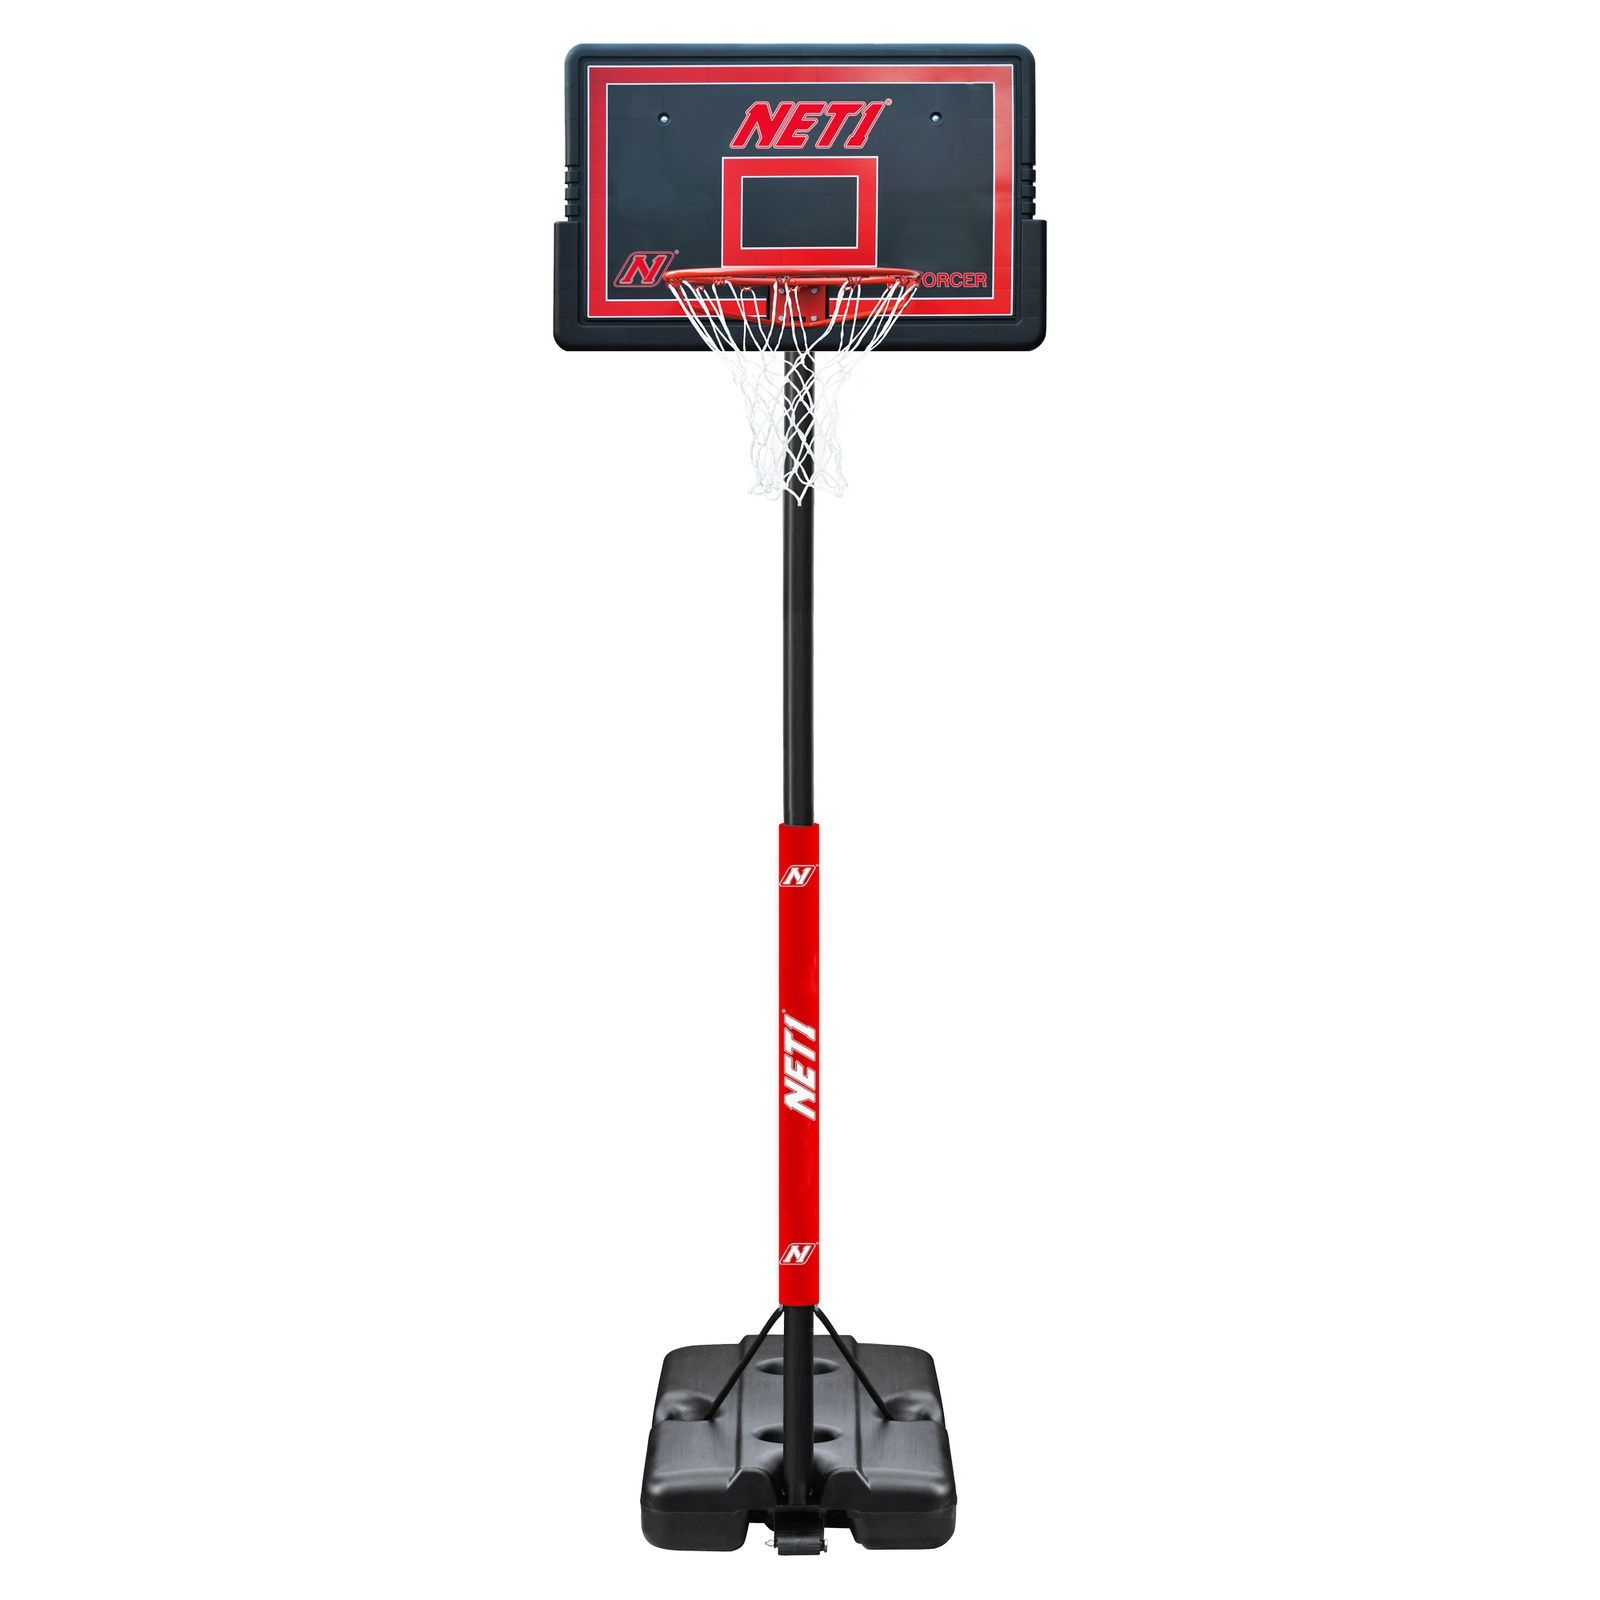 Enforcer Portable Basketball System